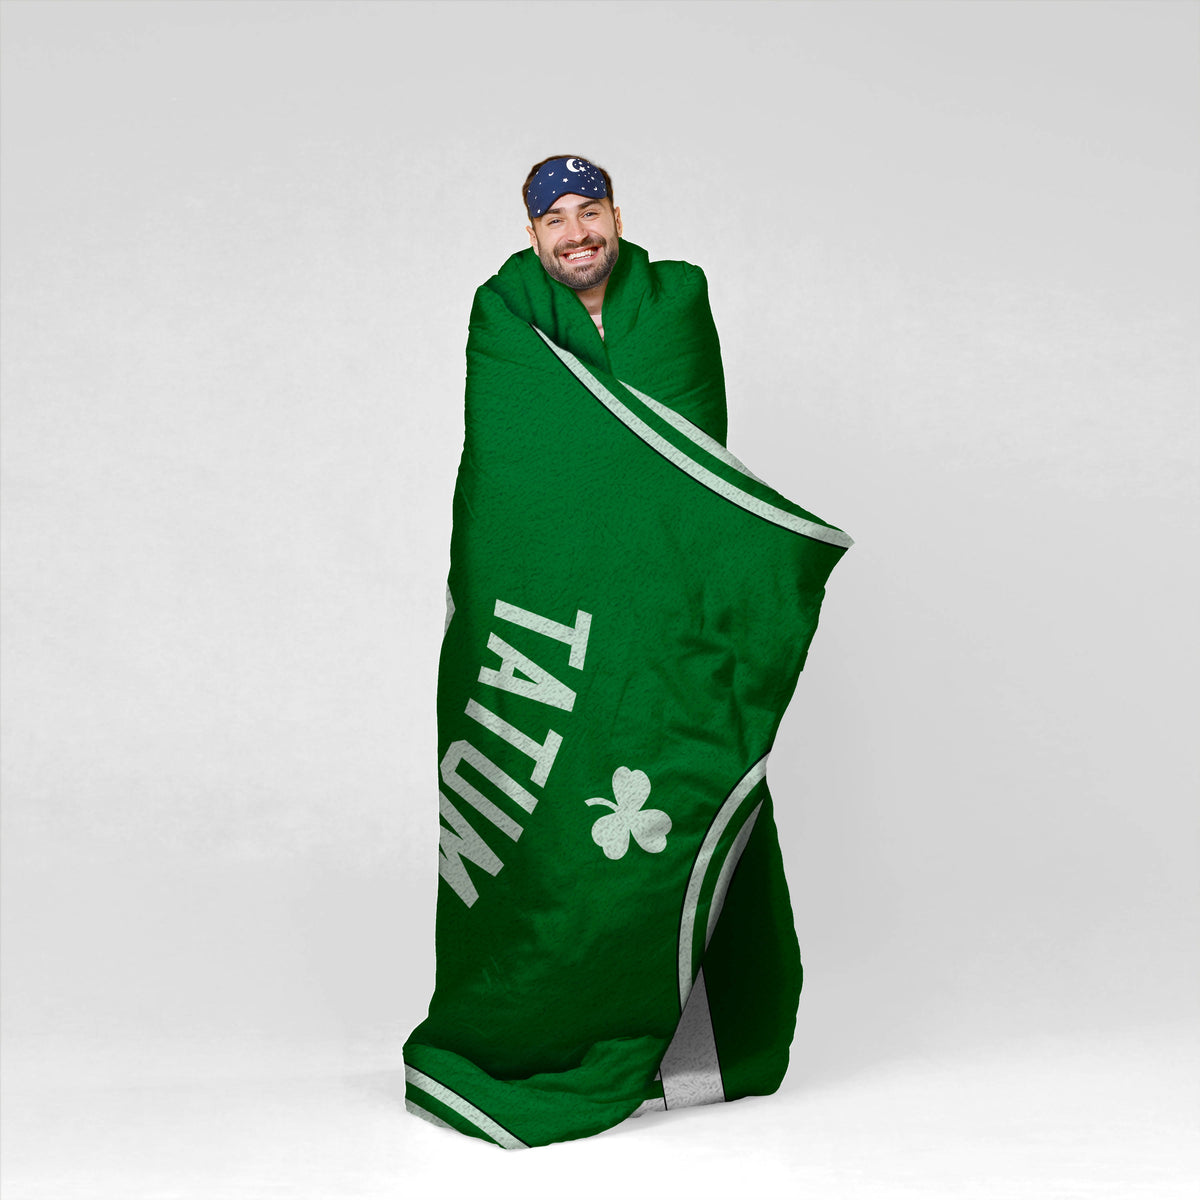 Celtics Jayson Tatum 60” x 80” Raschel Plush Blanket